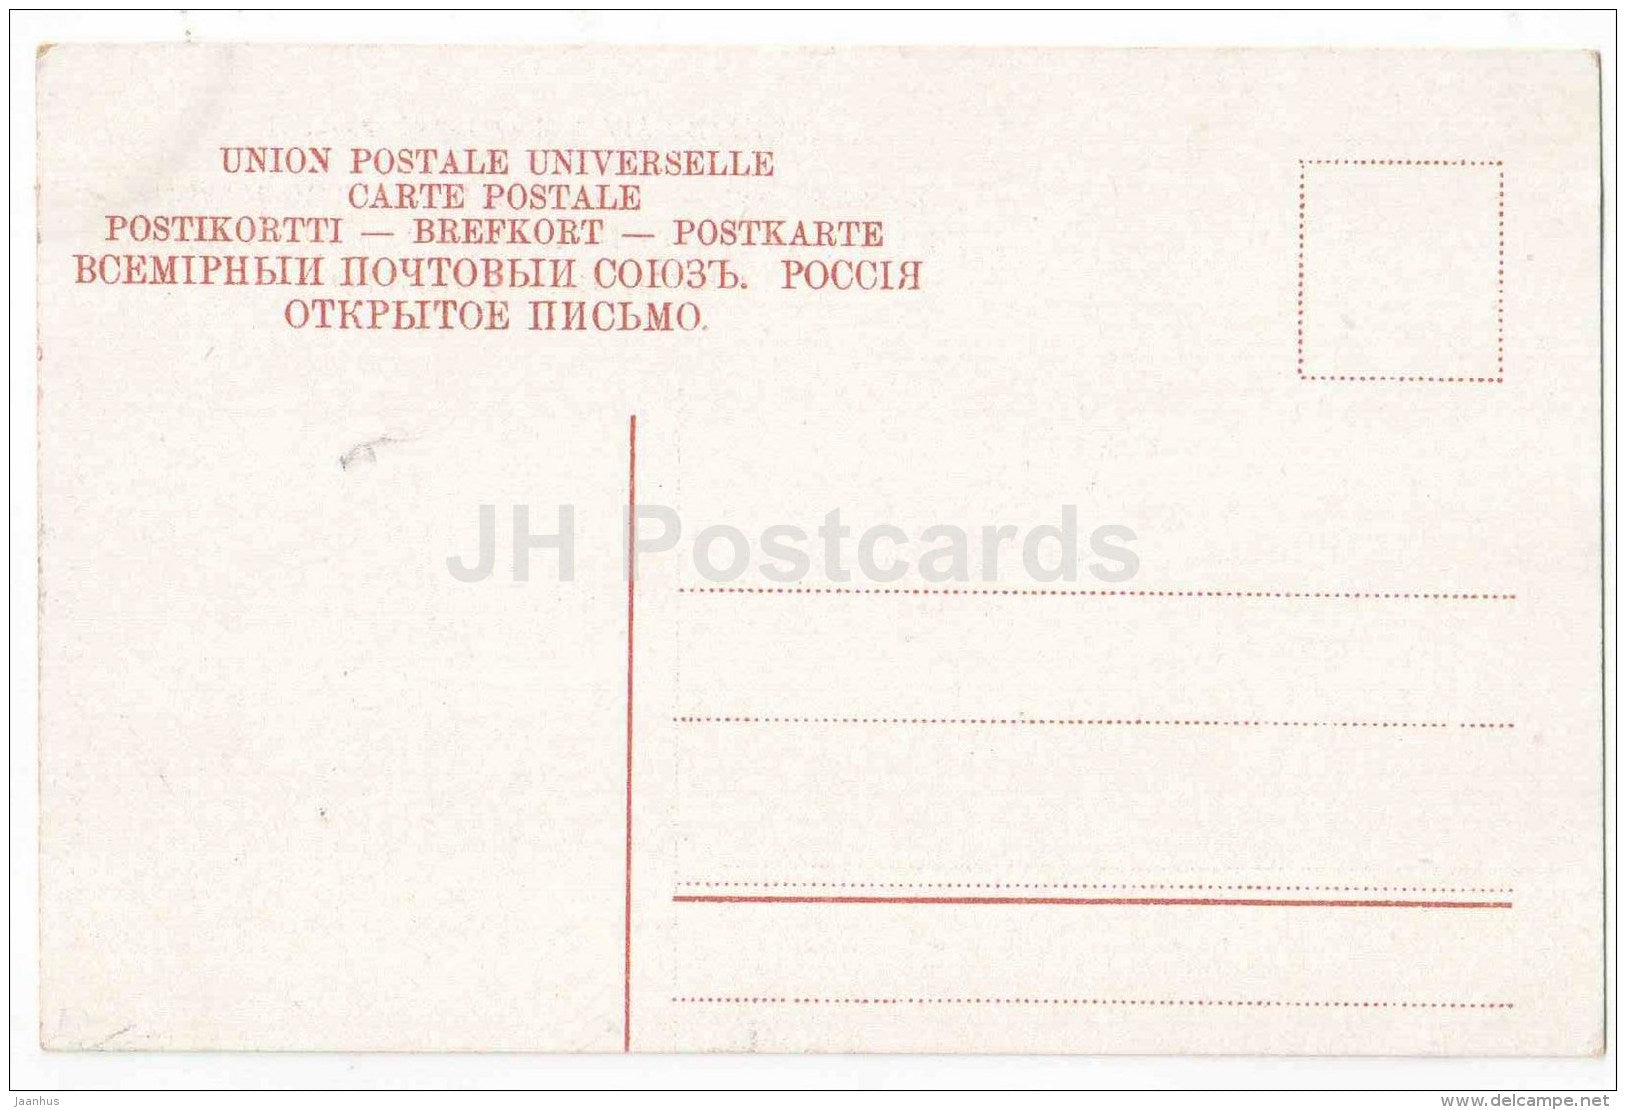 Saimaan Kanava - channel - old postcard - Finland - Tsarist Russia - unused - JH Postcards